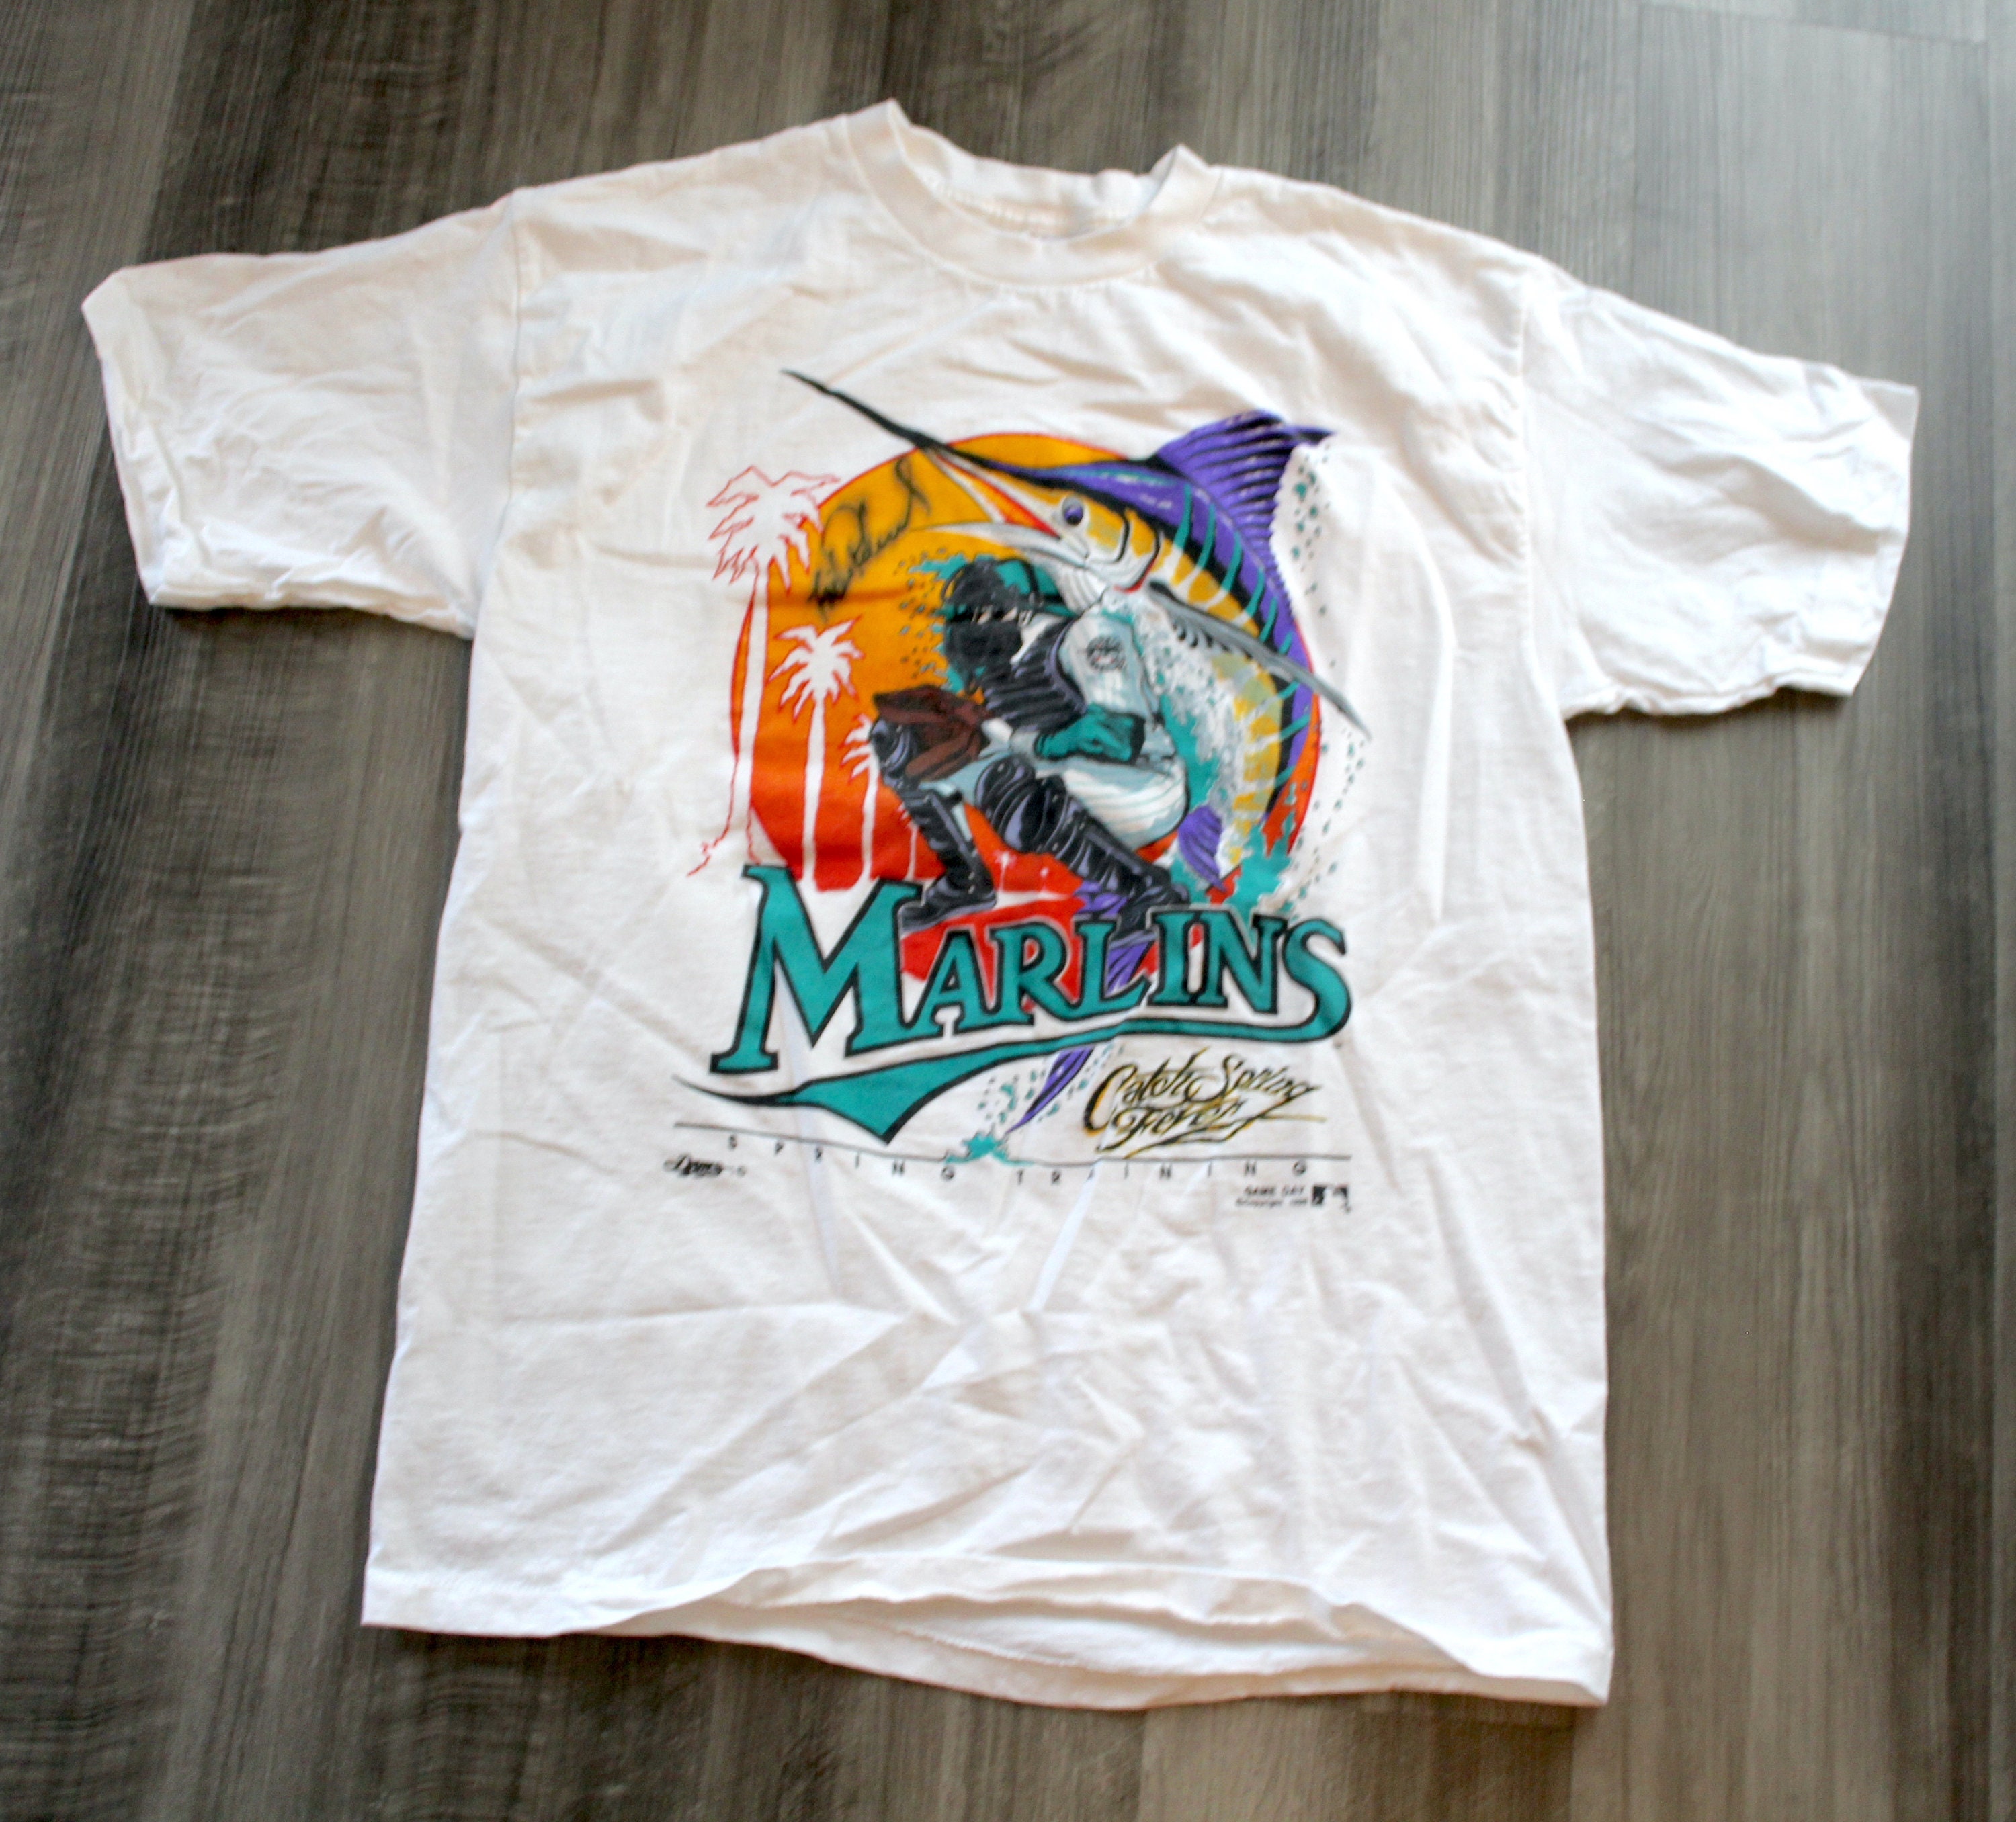 Mlb Miami Marlins Baseball Game Day Unisex Shirt - T-shirts Low Price